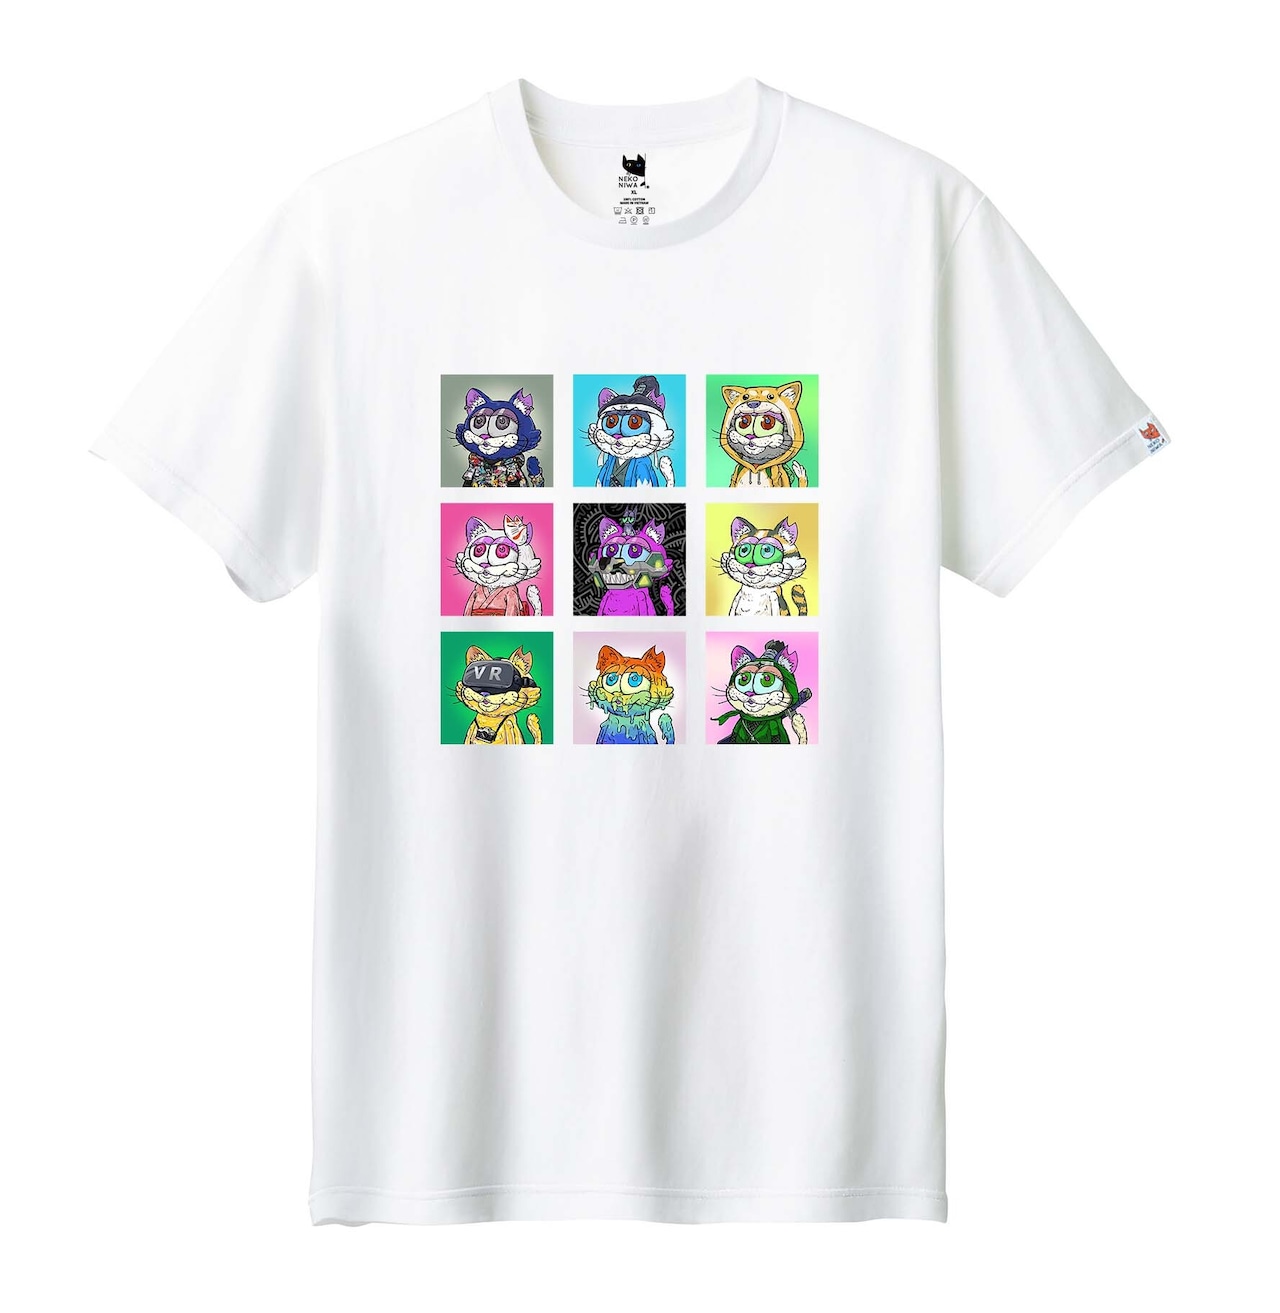 【CatRescue】9 Square T-shirt　★全国送料無料!!★